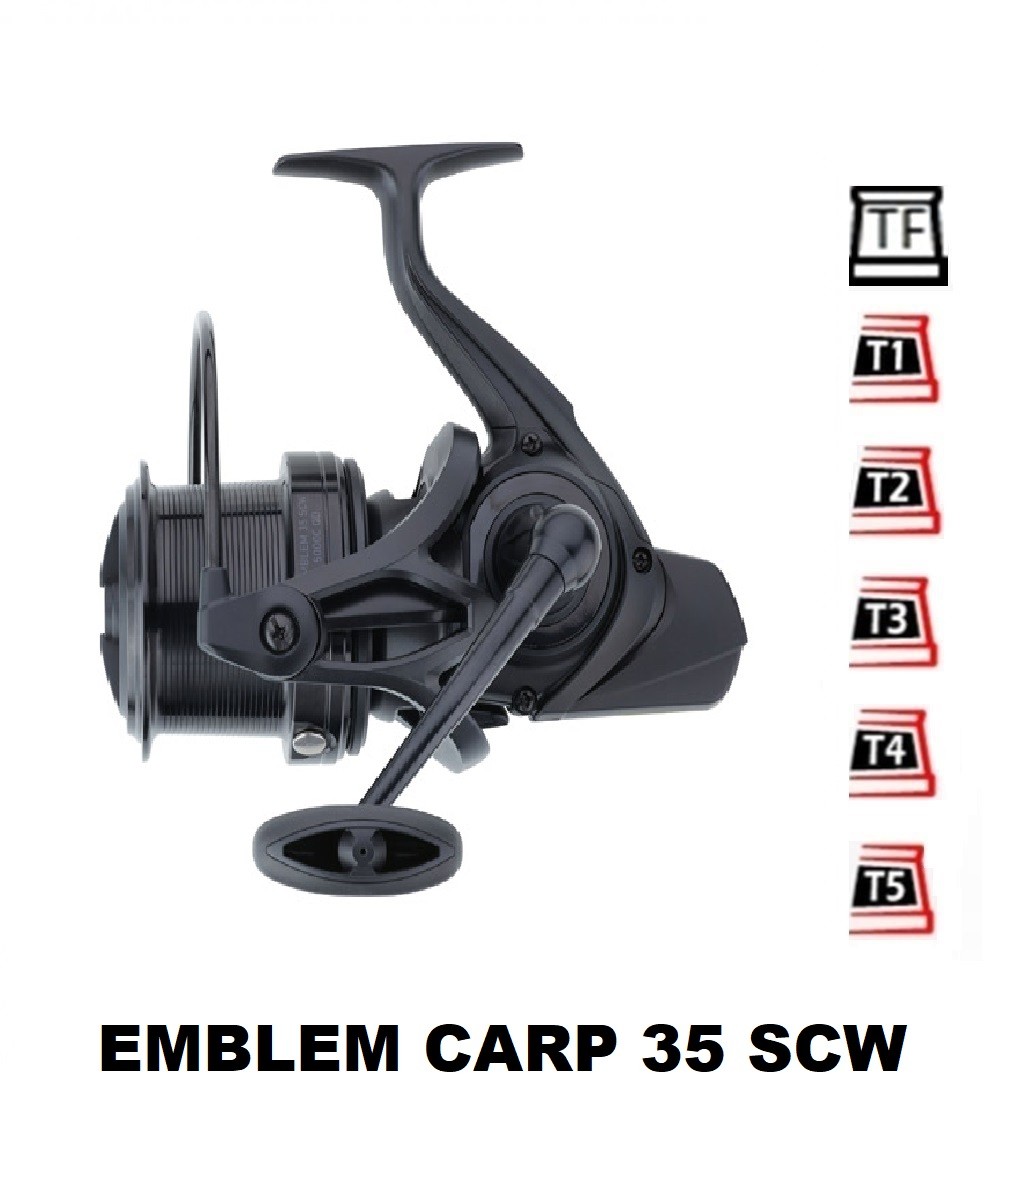 https://www.mvspools.com/5135/spare-spools-and-accessories-compatible-with-fishing-reel-daiwa-emblem-carp-scw-35.jpg